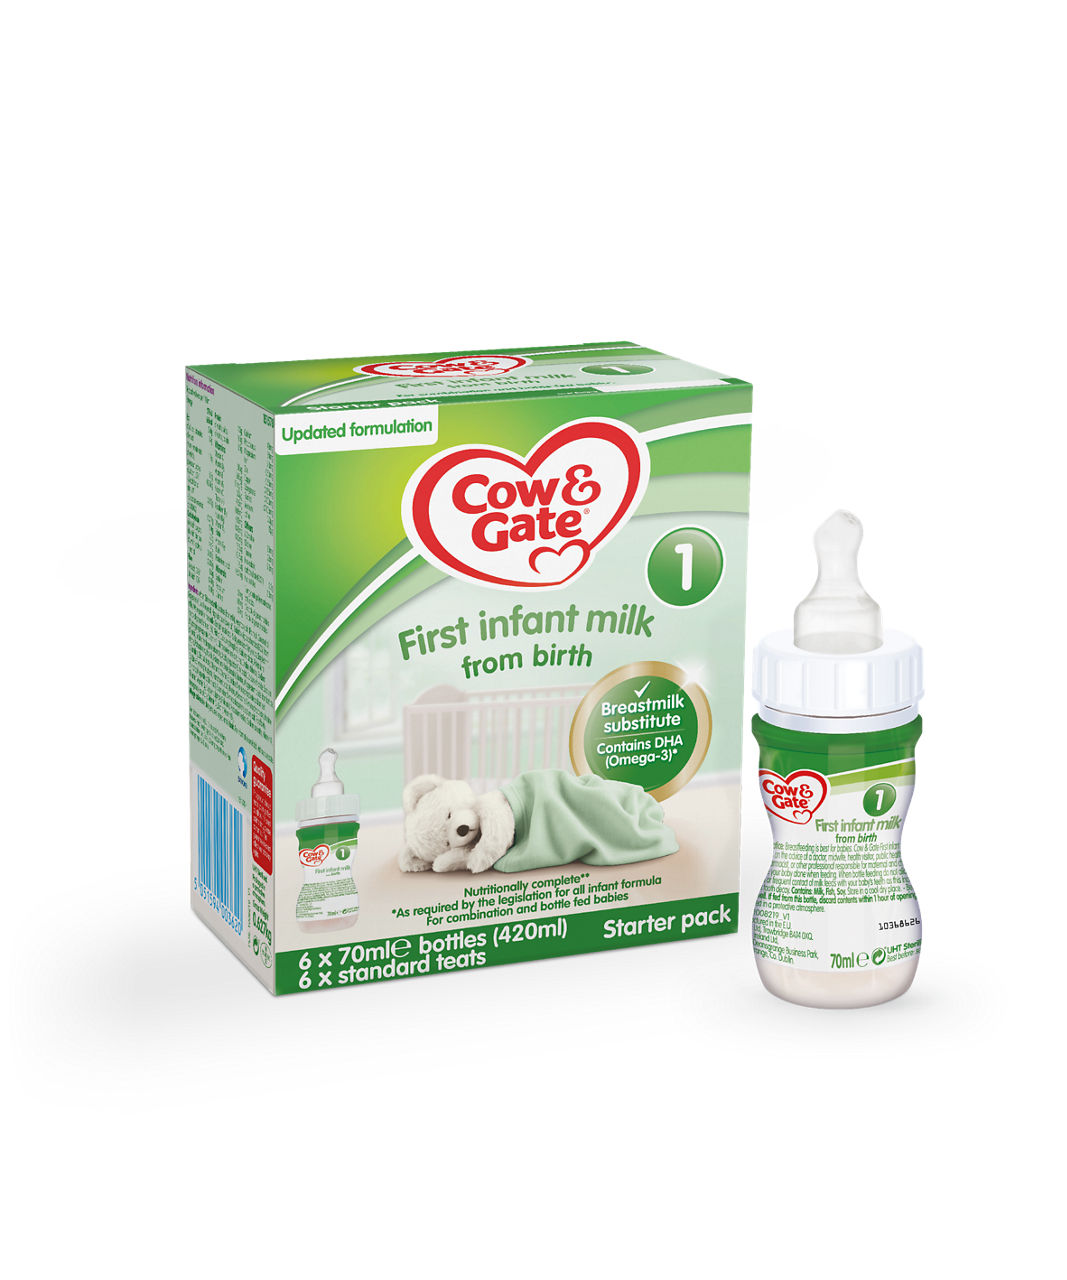 en-GB,Cow & Gate First Infant milk (liquid) Starter Pack